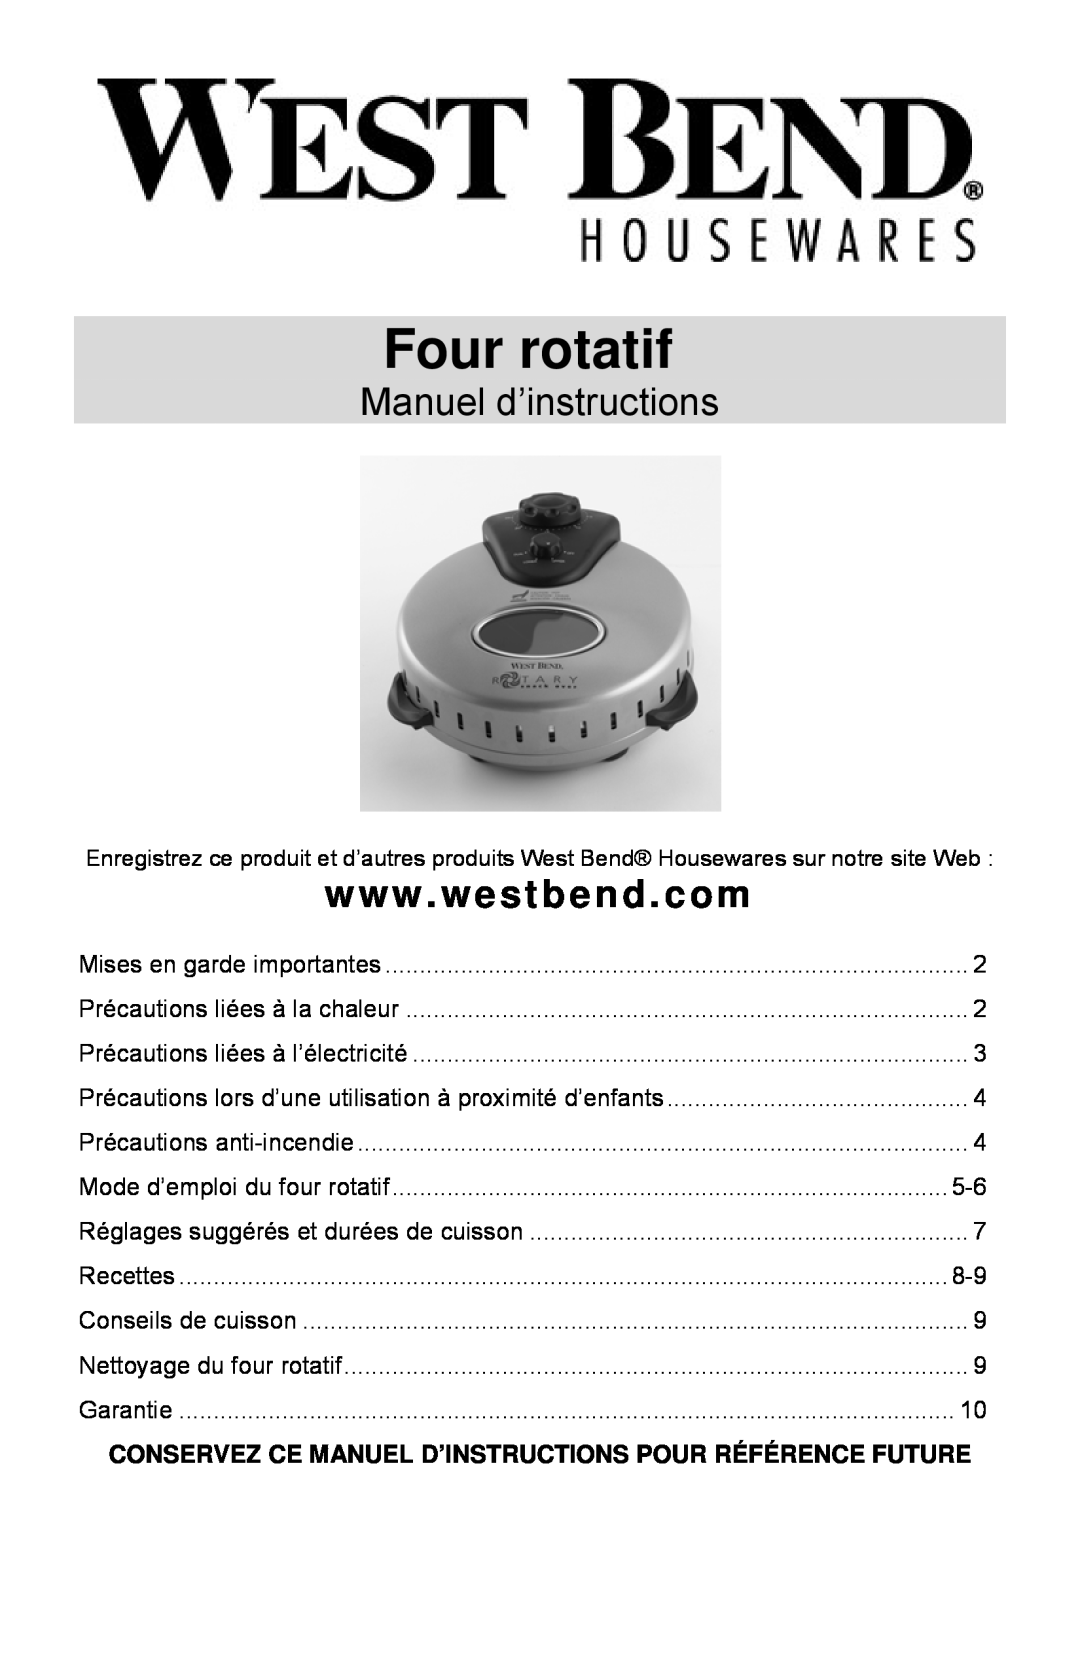 West Bend Rotisserie Oven instruction manual Four rotatif, Manuel d’instructions 